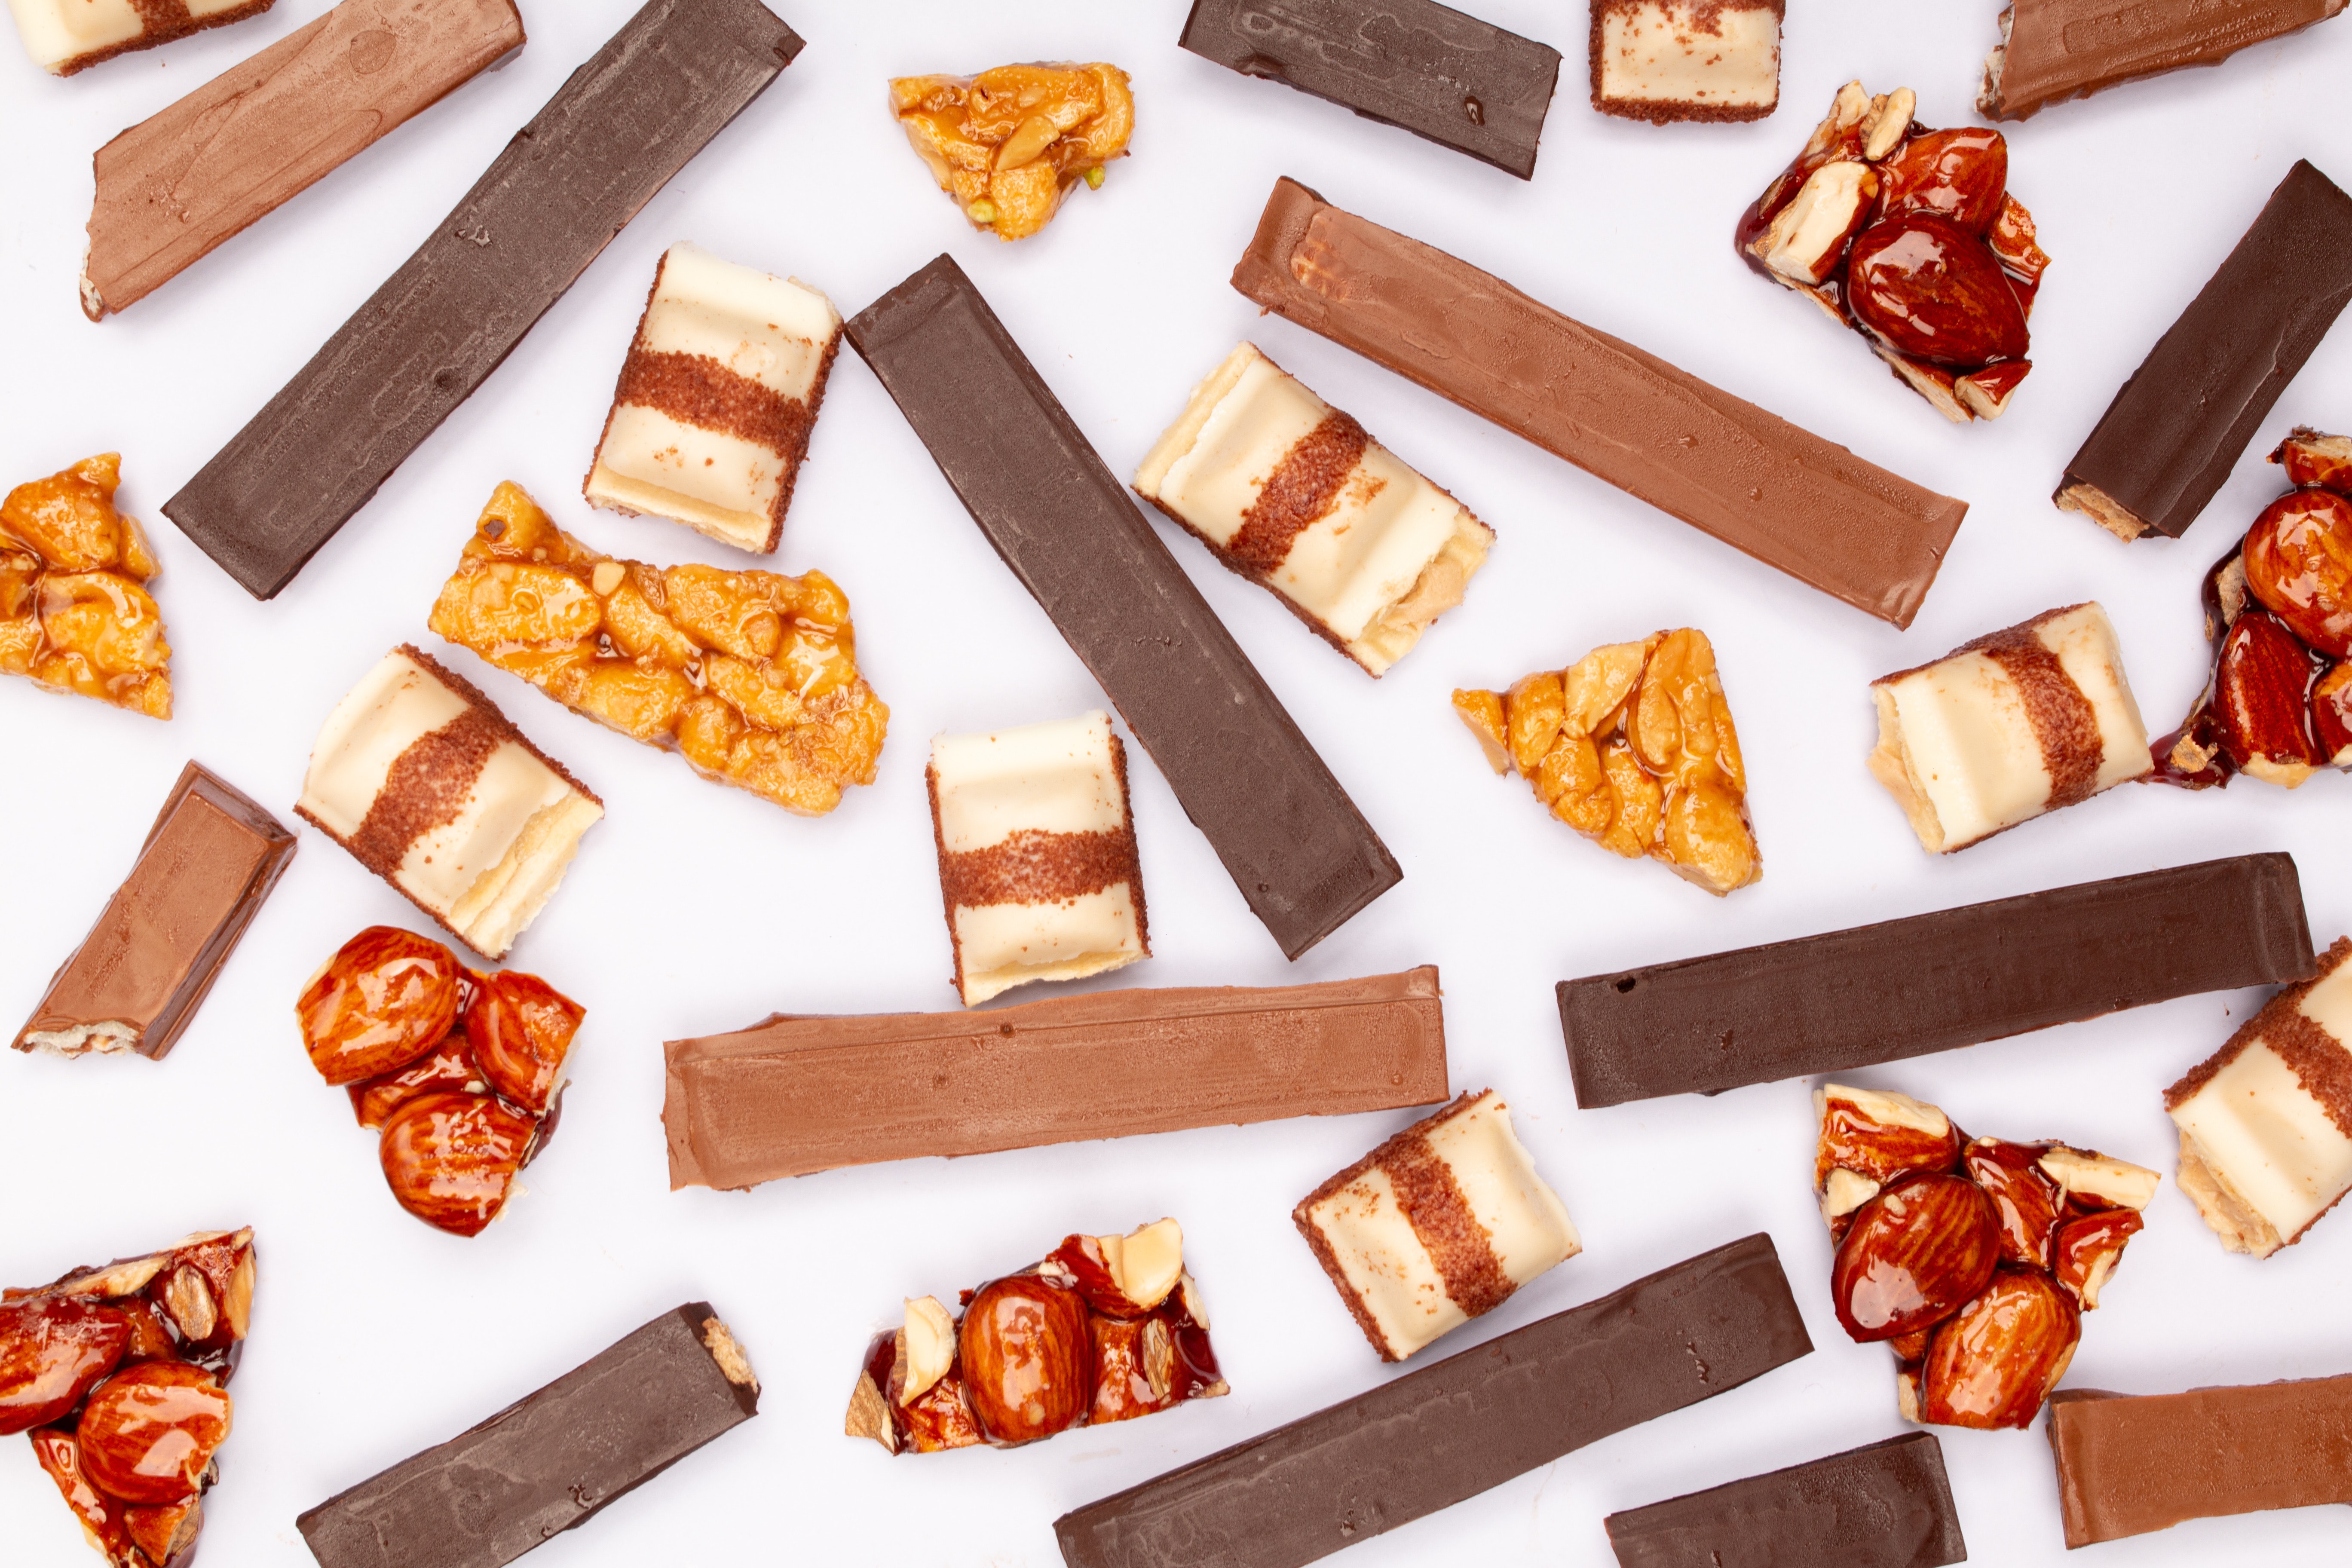 Swiss food company Nestle raises prices for Kitkat chocolate